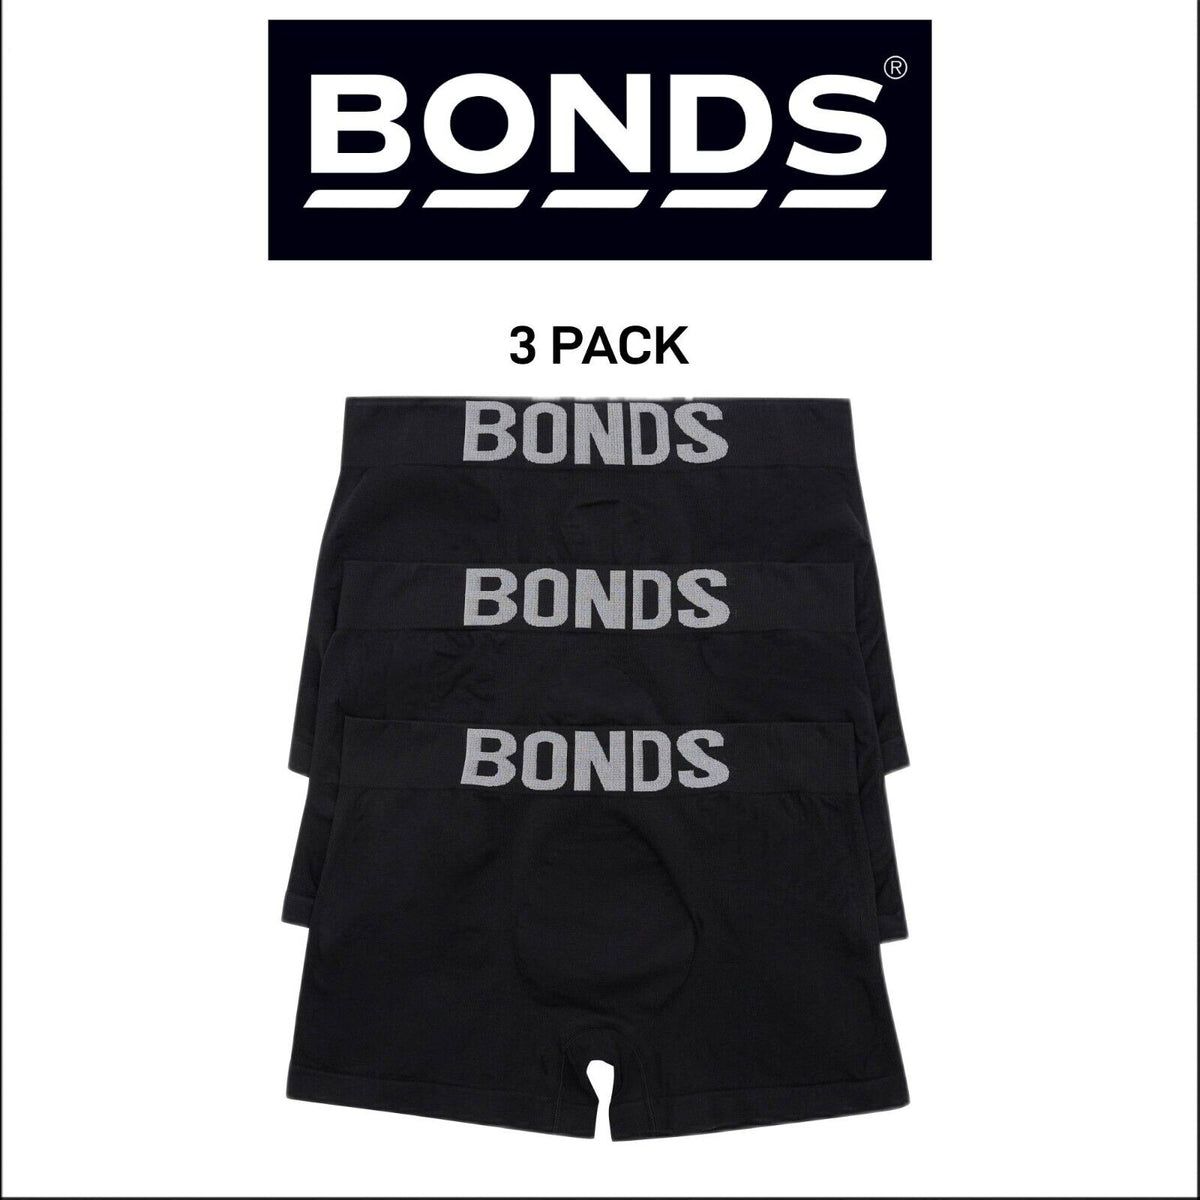 Bonds Mens Seamless Trunk Design for Maximum Comfort and Stretch 3 Pack MXY7A